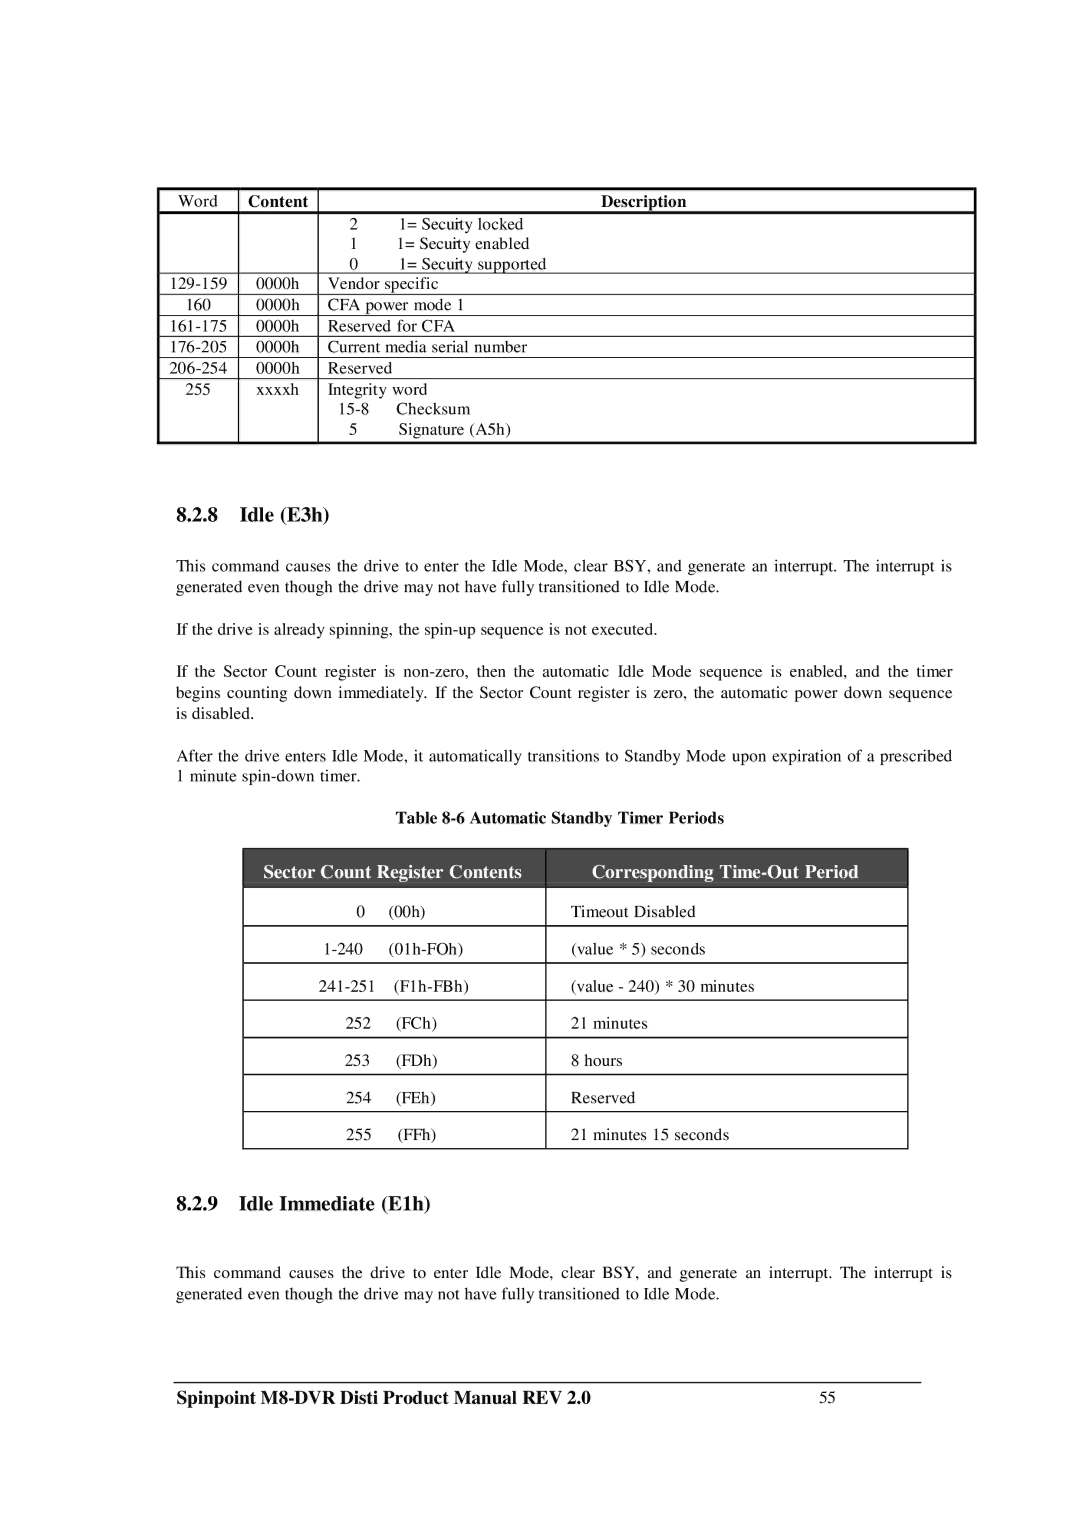 Samsung M8-DVR manual Idle E3h, Idle Immediate E1h, Automatic Standby Timer Periods 